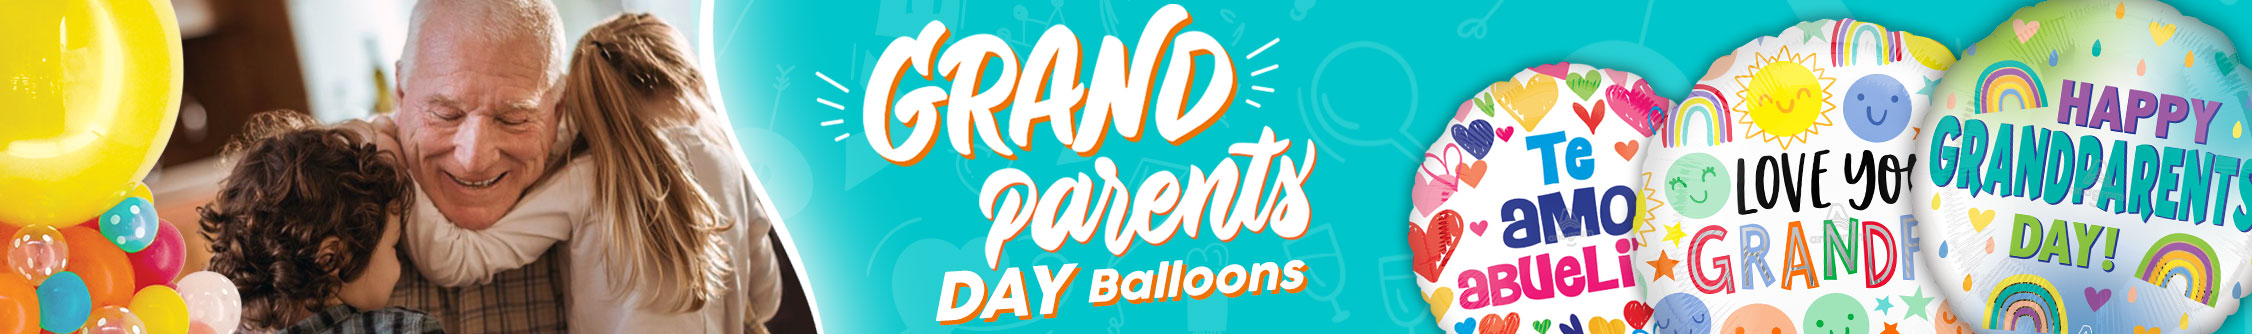 Grandparents Day Balloons Banner